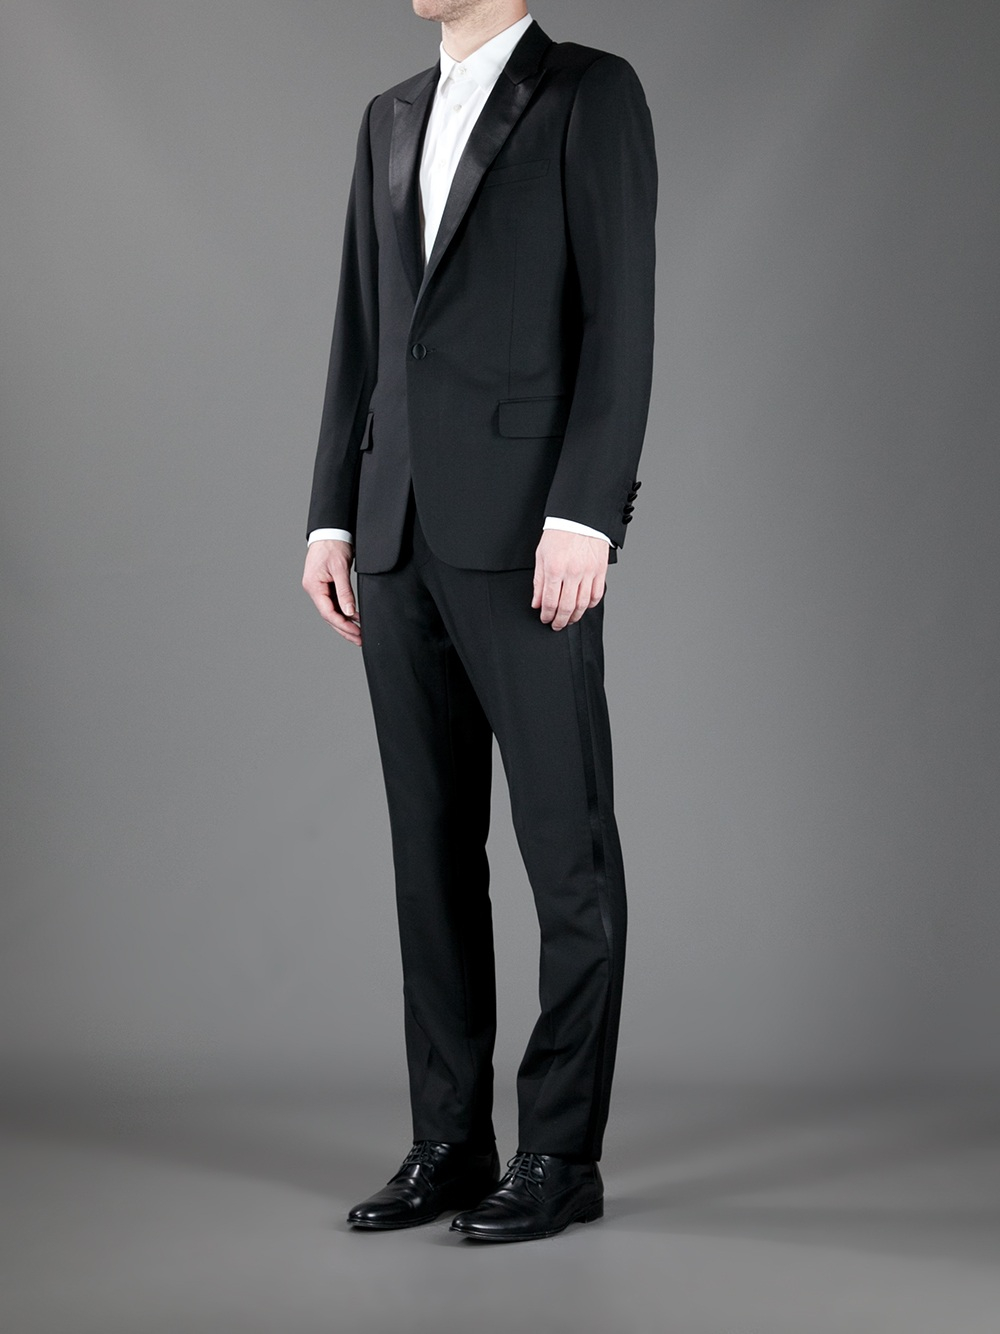 Dior Homme Suit Sale Shop, GET 51% OFF, beefandlobster.ie